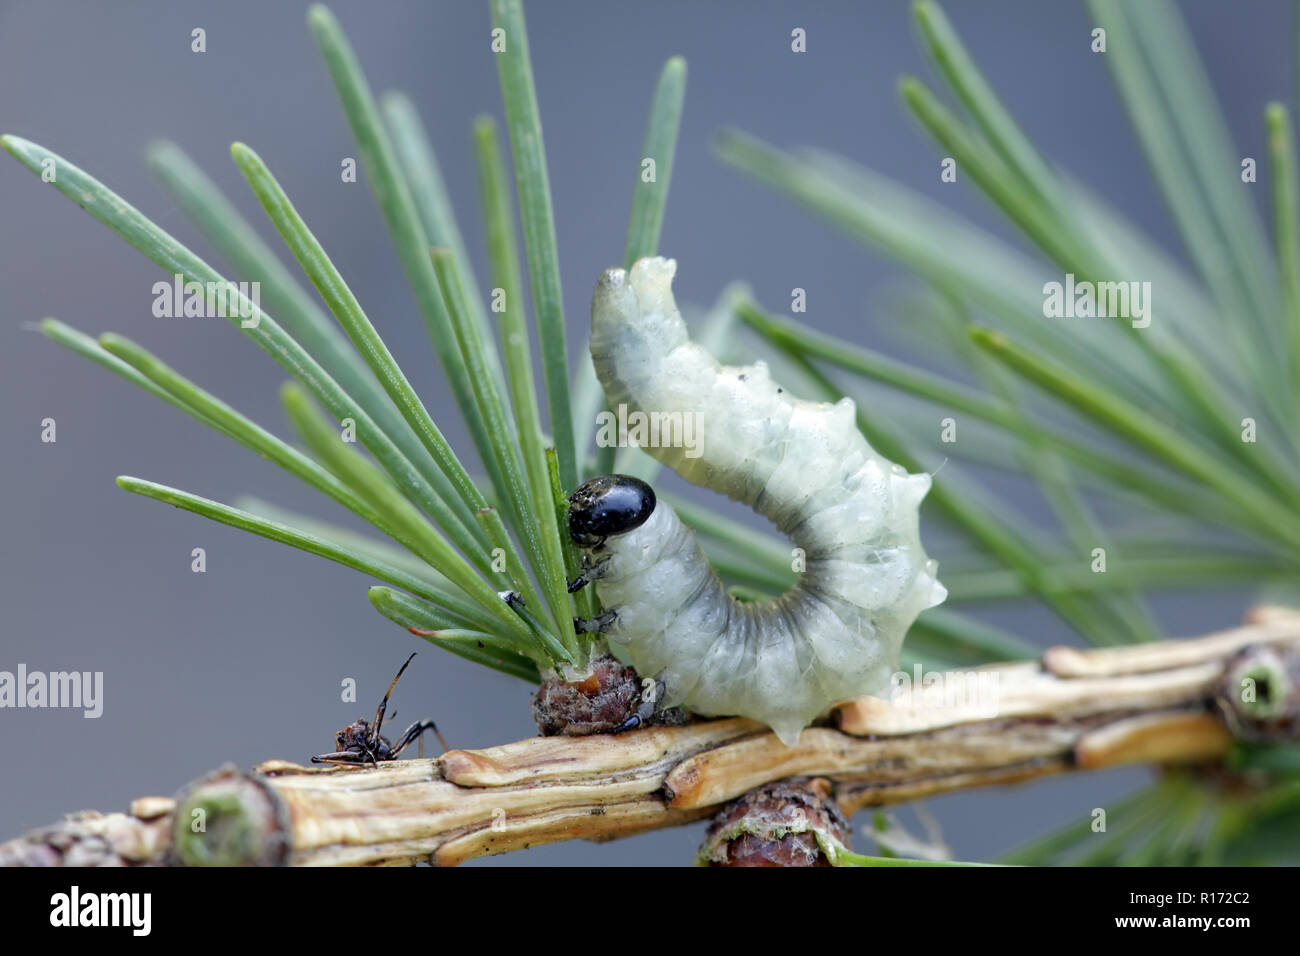 Larch sawfly larva, Pristiphora erichsonii, major pest of larch trees Stock Photo